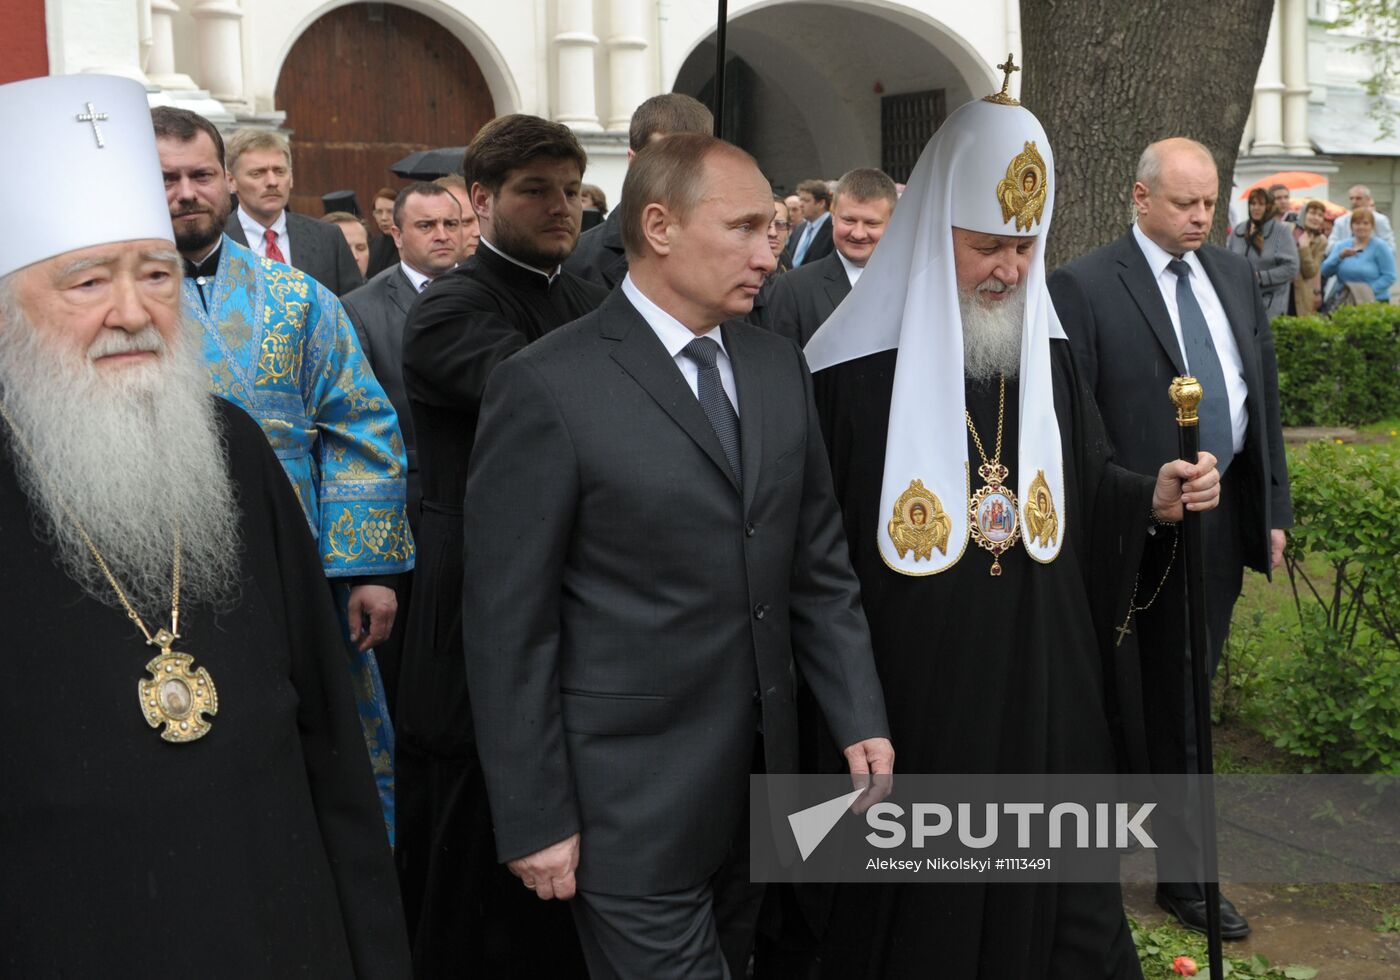 Vladimir Putin visits Novodevichy Convent